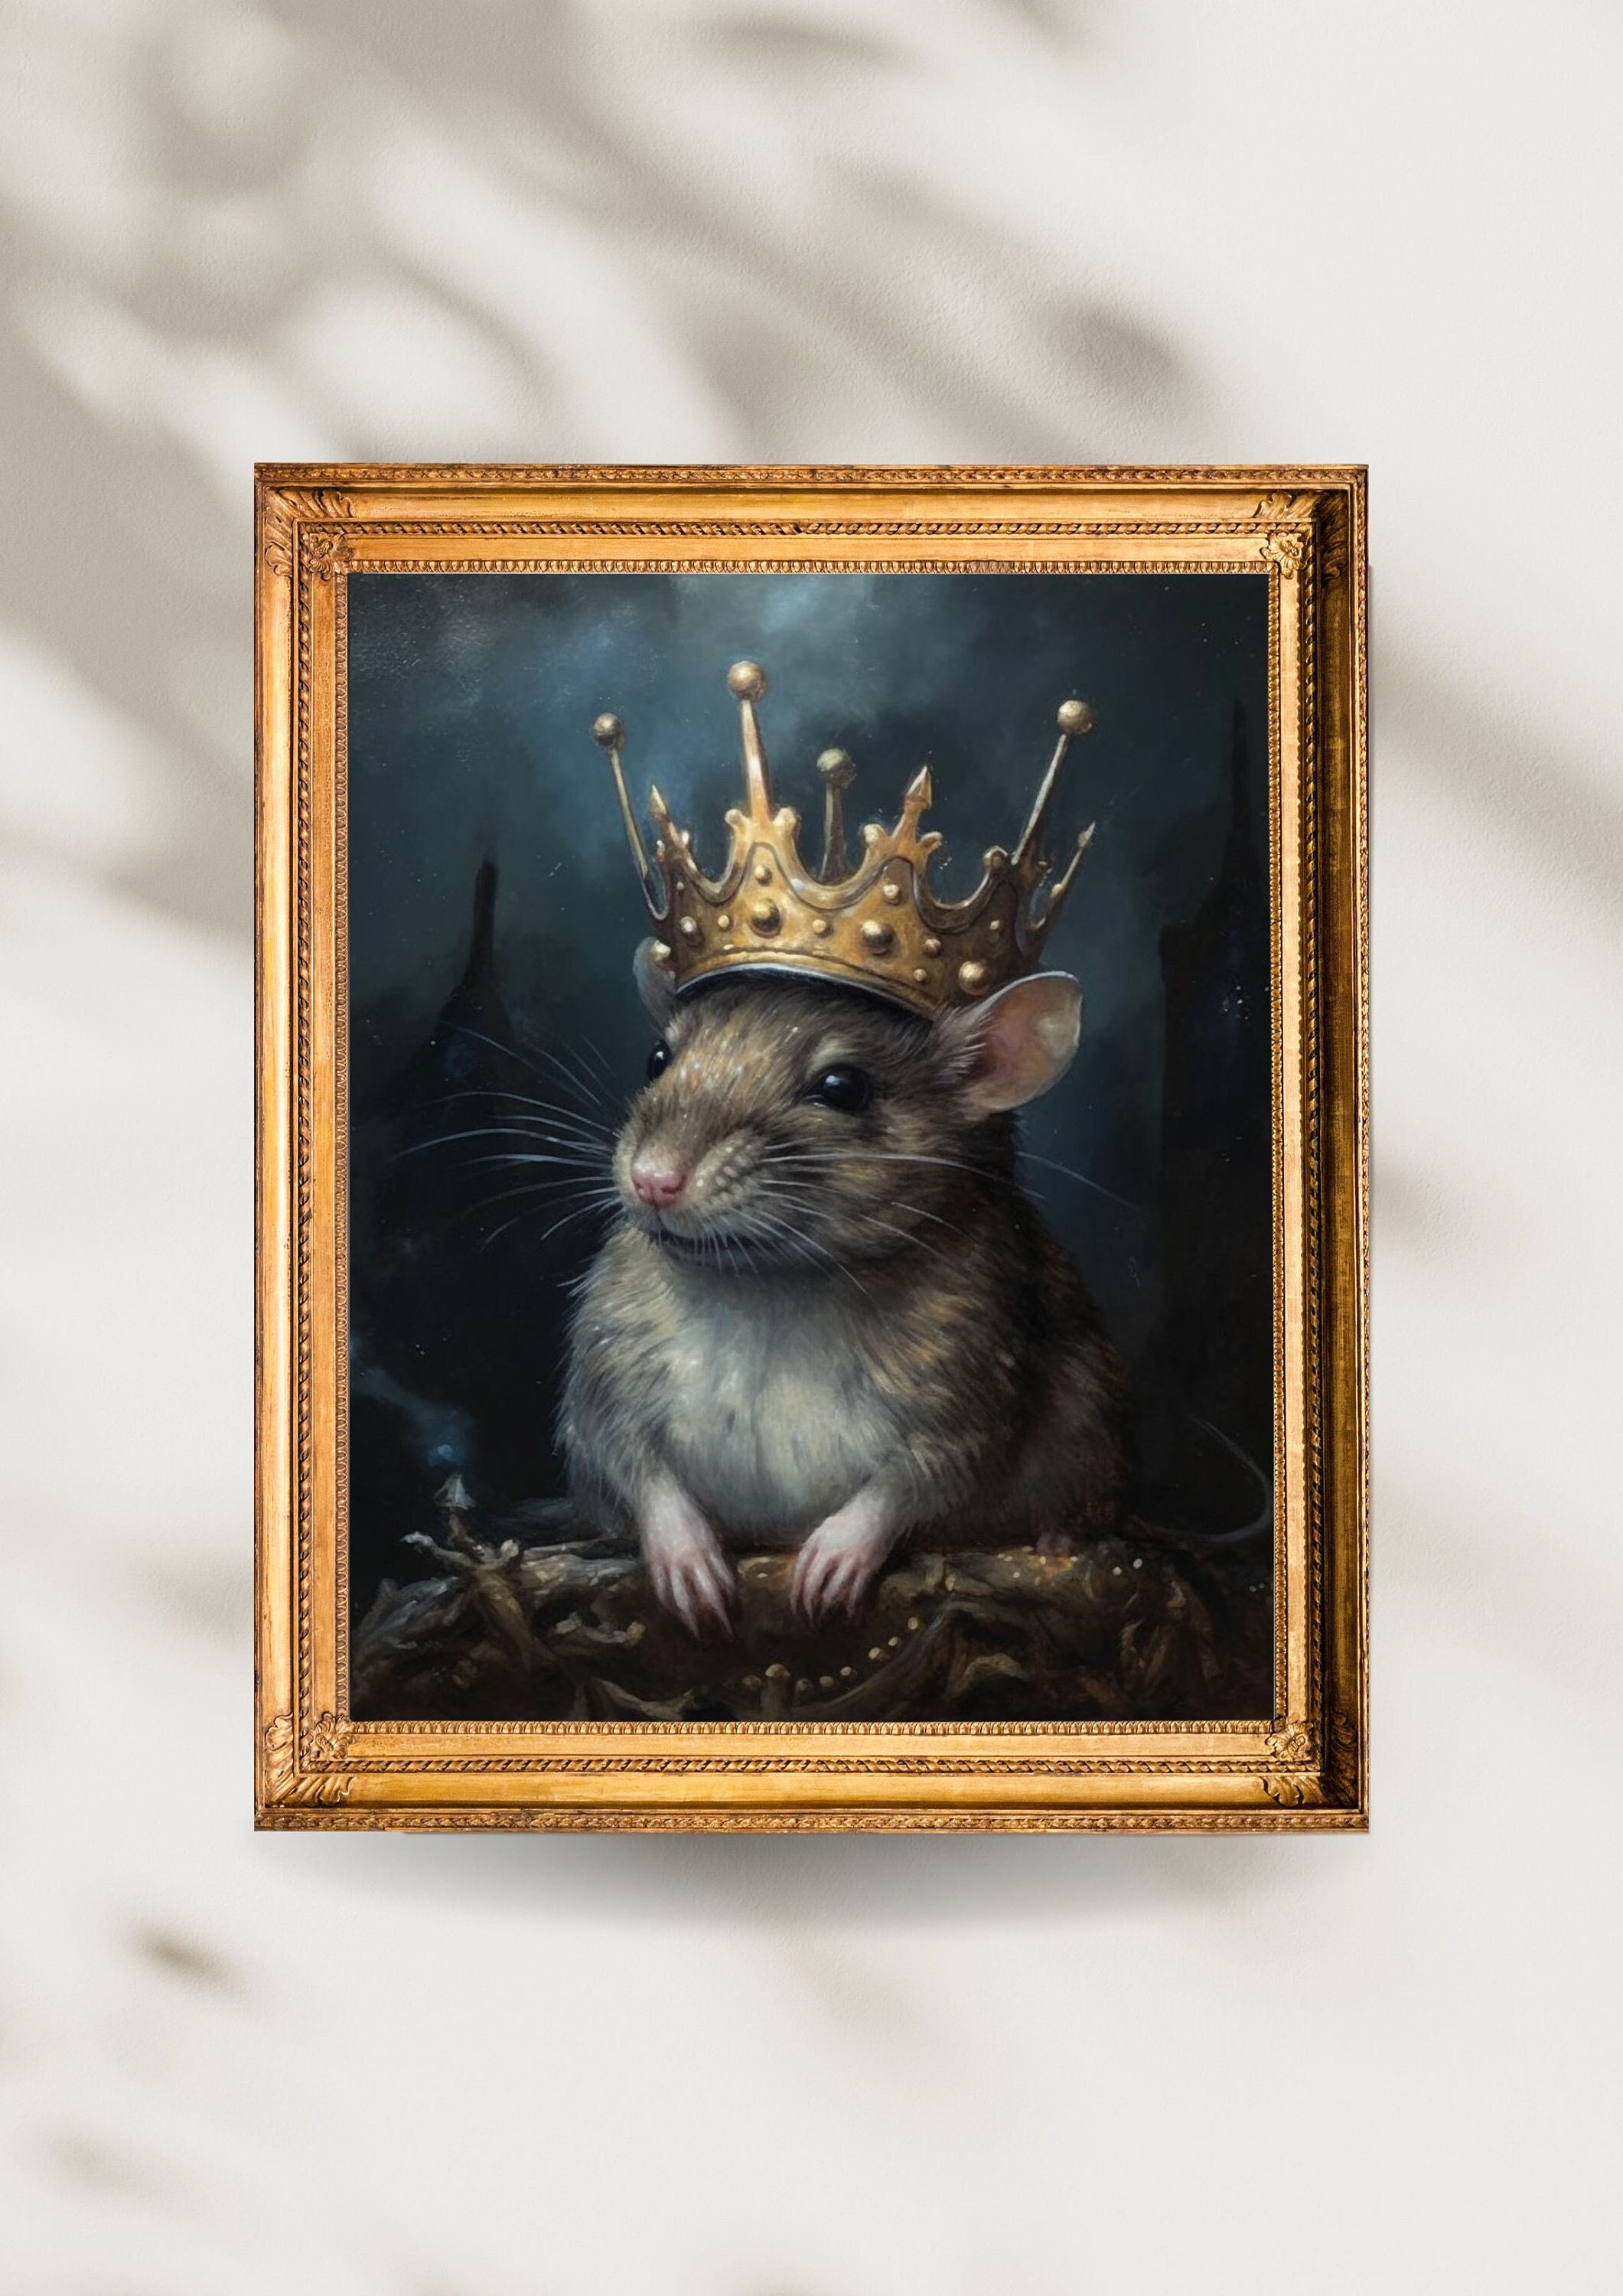 Rat King/dark Academia/cottage Core/rat/witchy Room (Instant Download) 